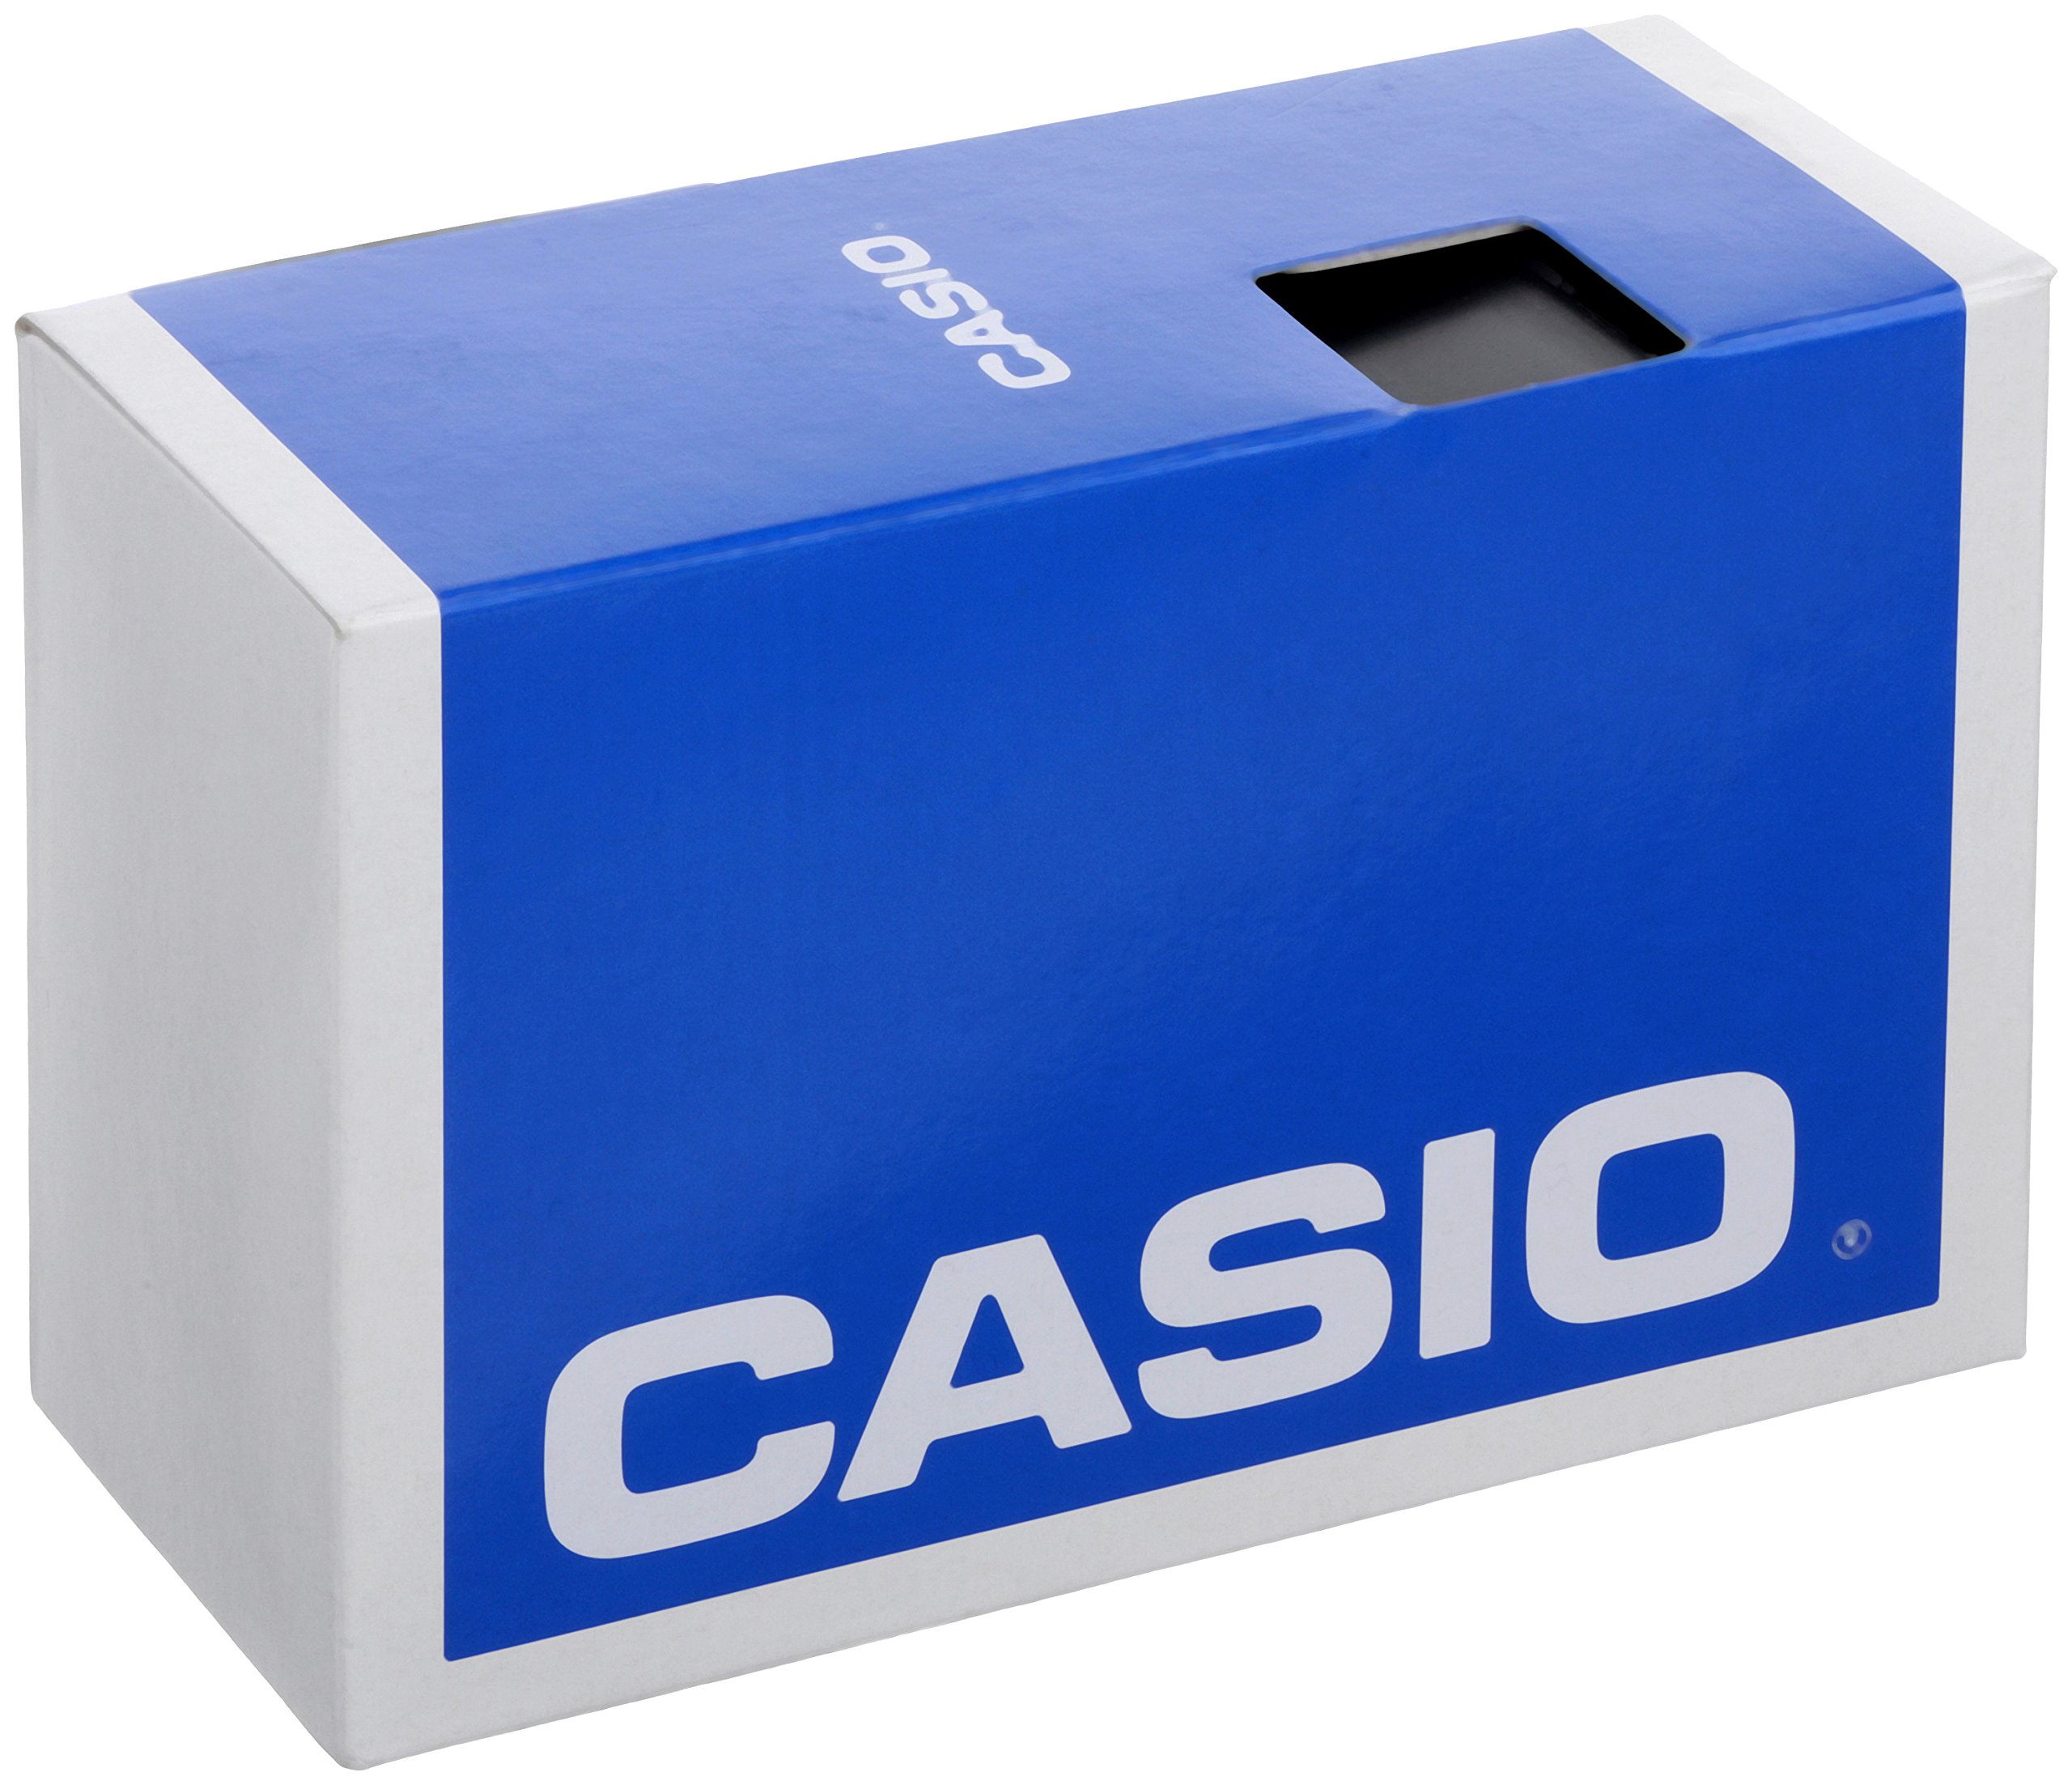 Casio Unisex MQ-71-4BCF Classic Luminous Hands Watch With Black Resin Band